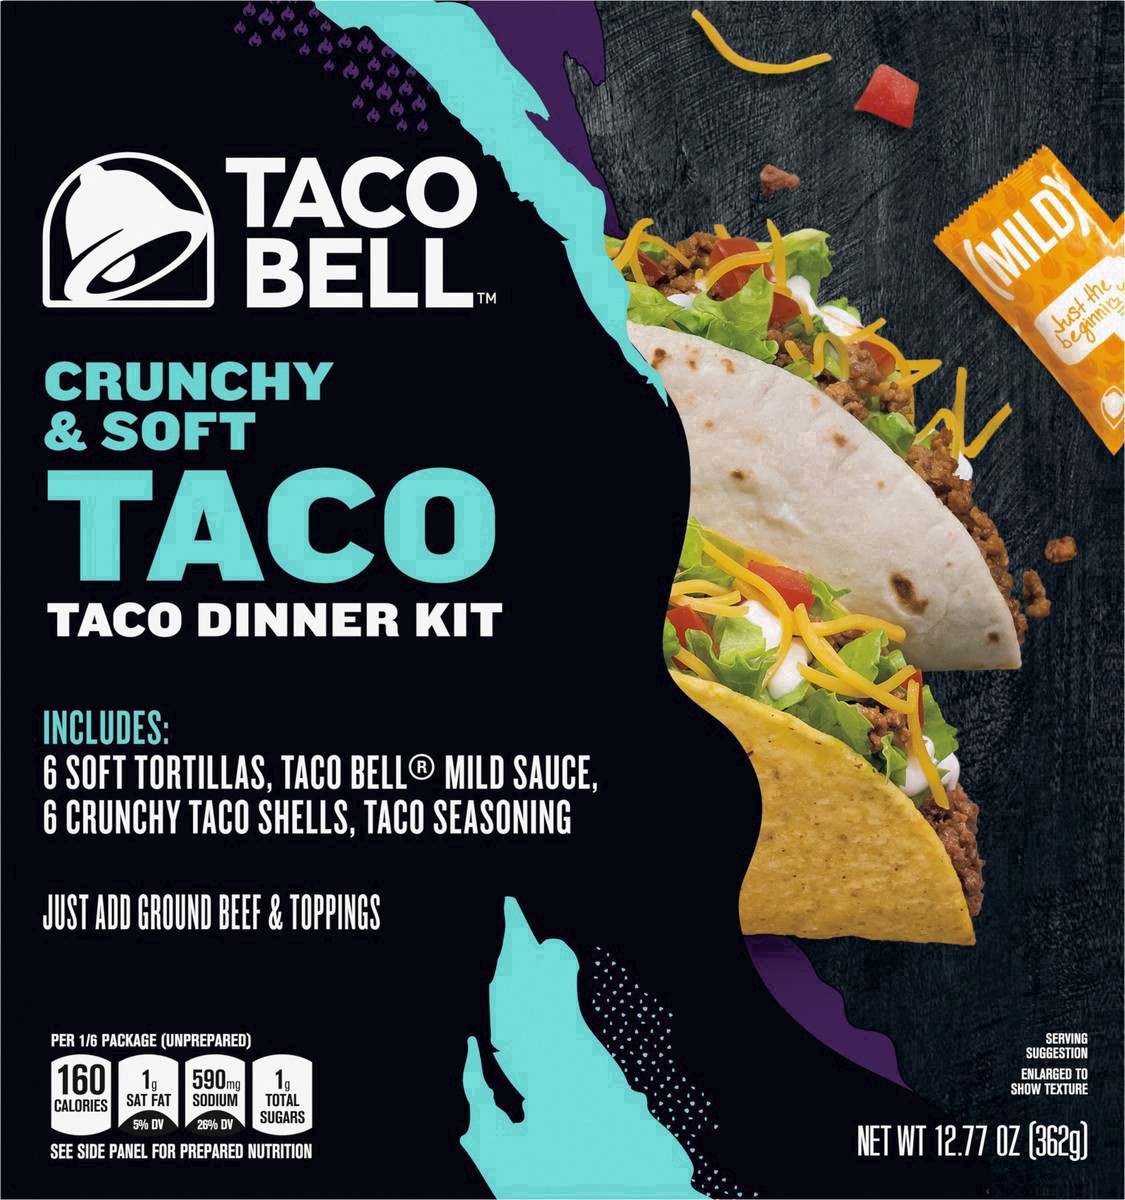 slide 19 of 101, Taco Bell Crunchy & Soft Taco Cravings Kit with 6 Soft Tortillas, 6 Crunchy Taco Shells, Taco Bell Mild Sauce & Seasoning, 12.77 oz Box, 1 ea